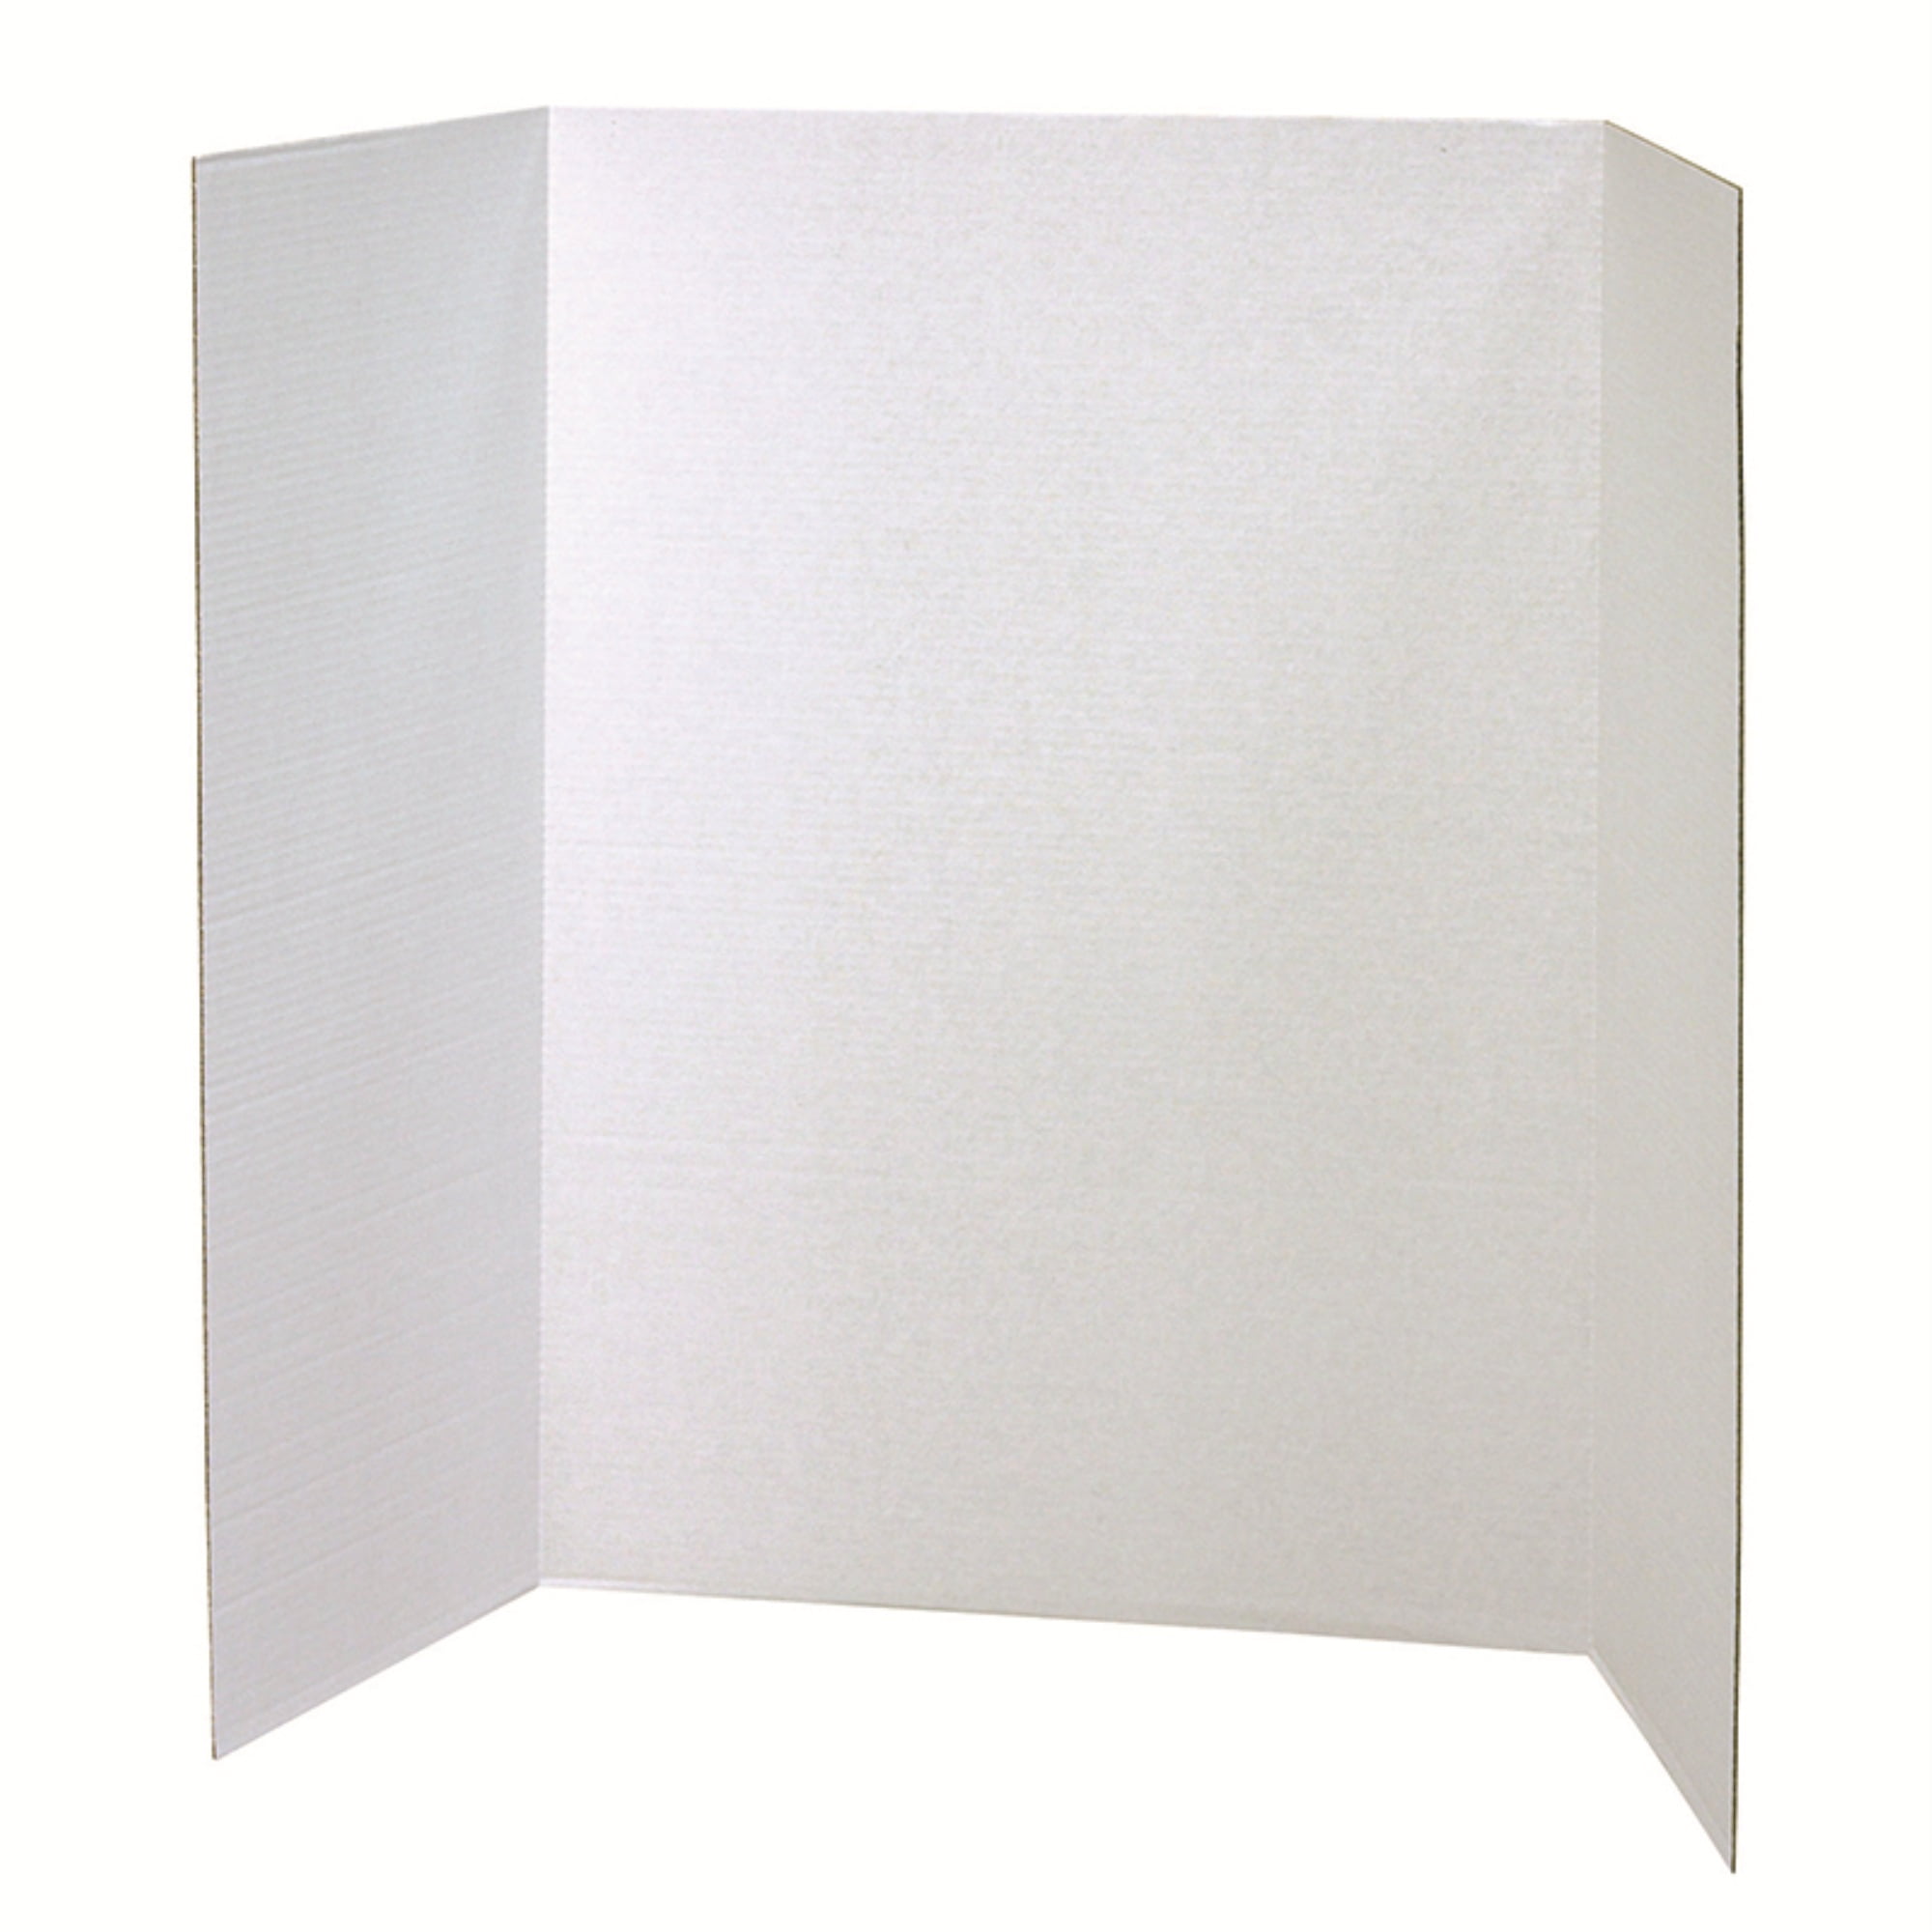 Pacon Tri-Fold Corrugated Presentation Display Boards, 48 x 36